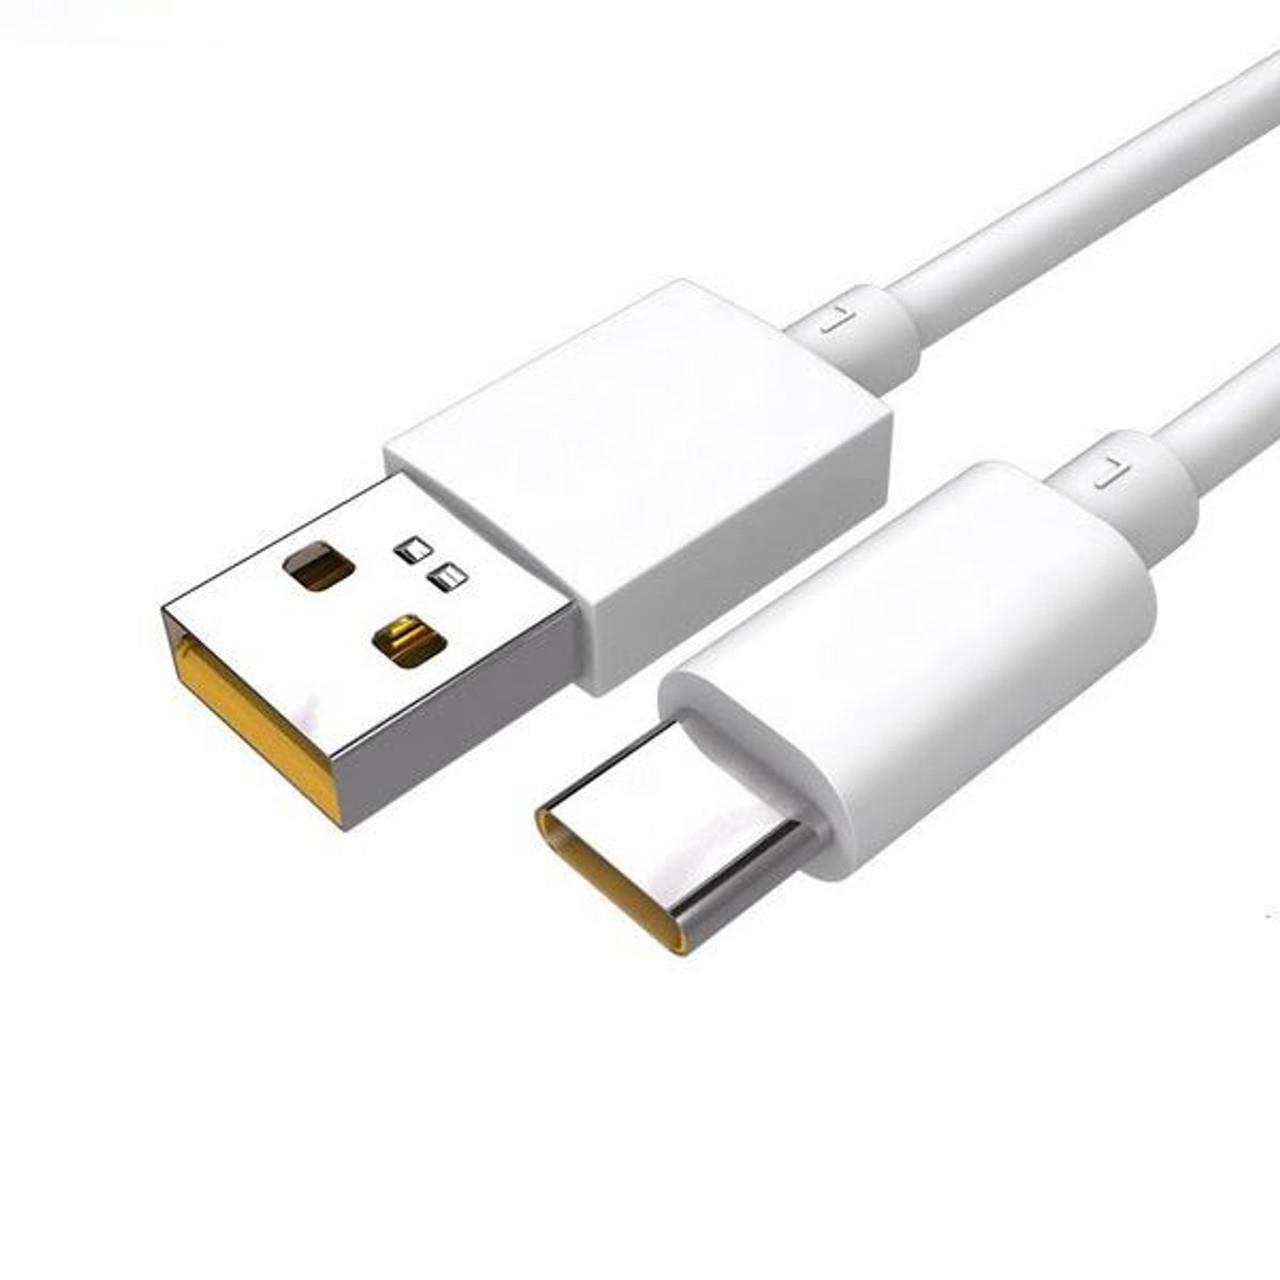 Oppo DL136 Ladekabel USB-Cauf USB-A 1m - Weiss